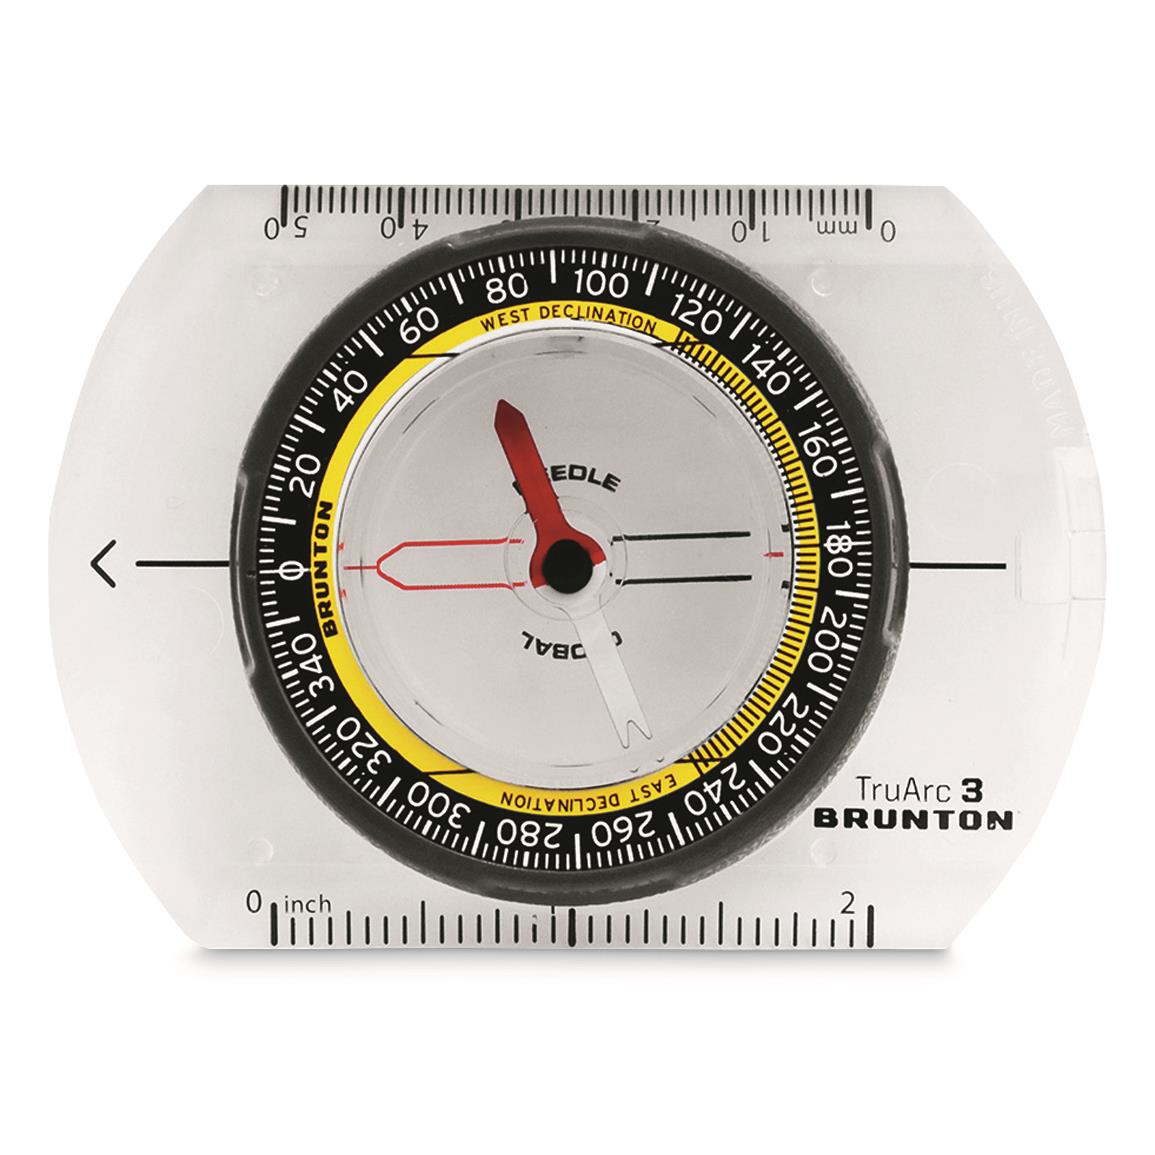 Brunton TruArc 3 Compass - 715074, Compasses  Multi Tools at Sportsman's  Guide